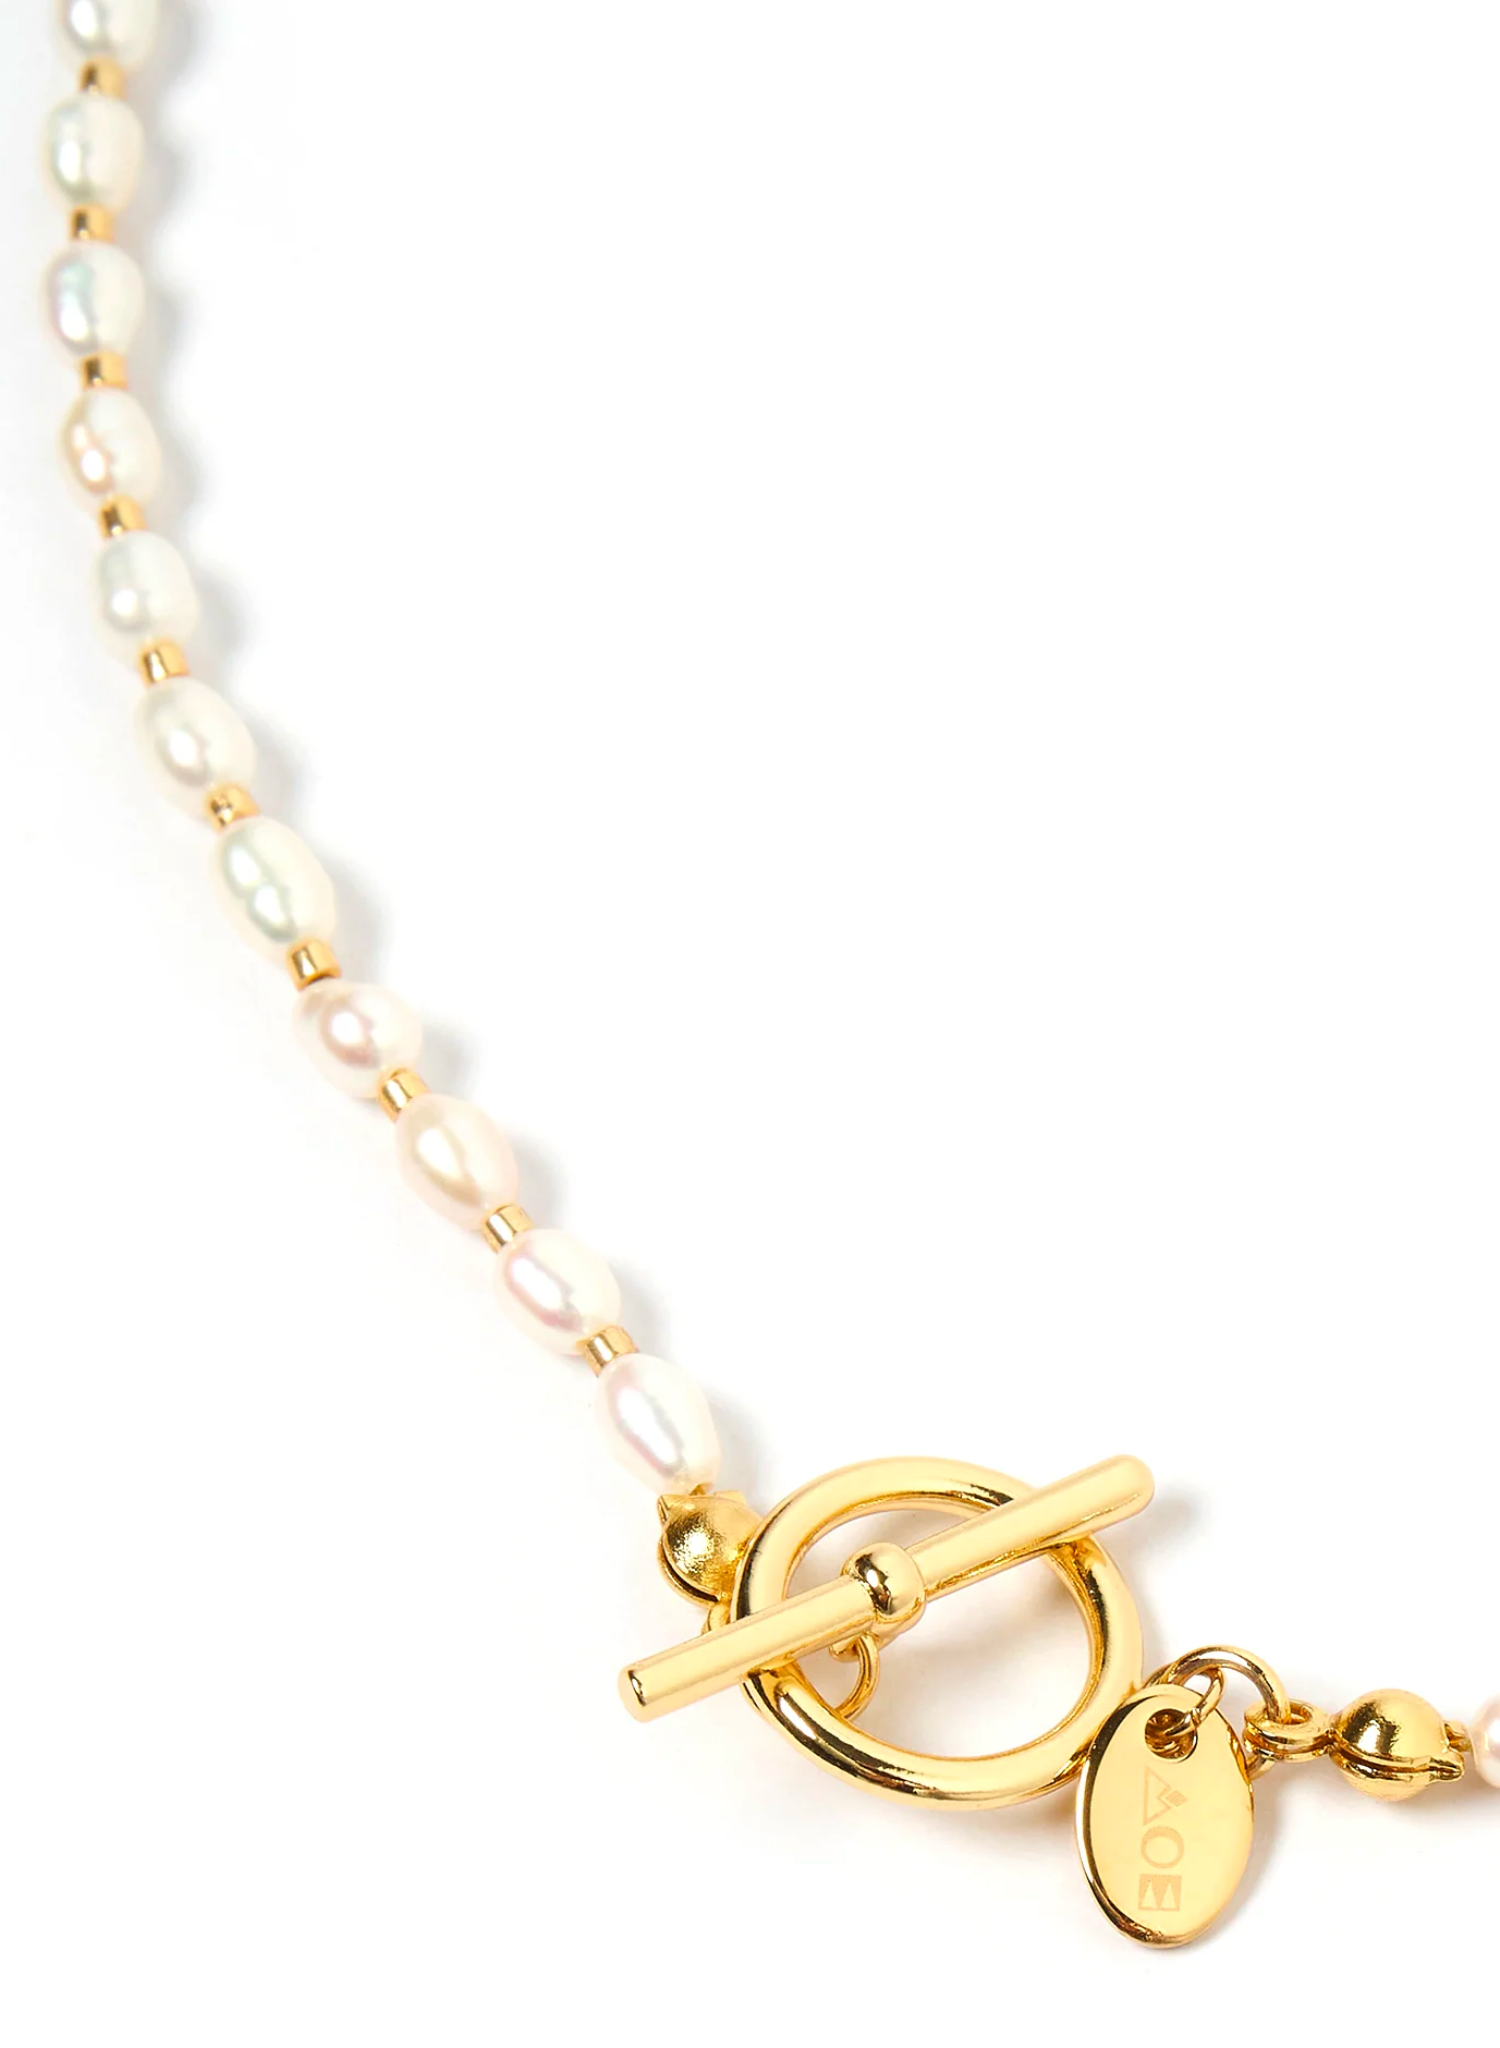 Bahamas Pearl Necklace